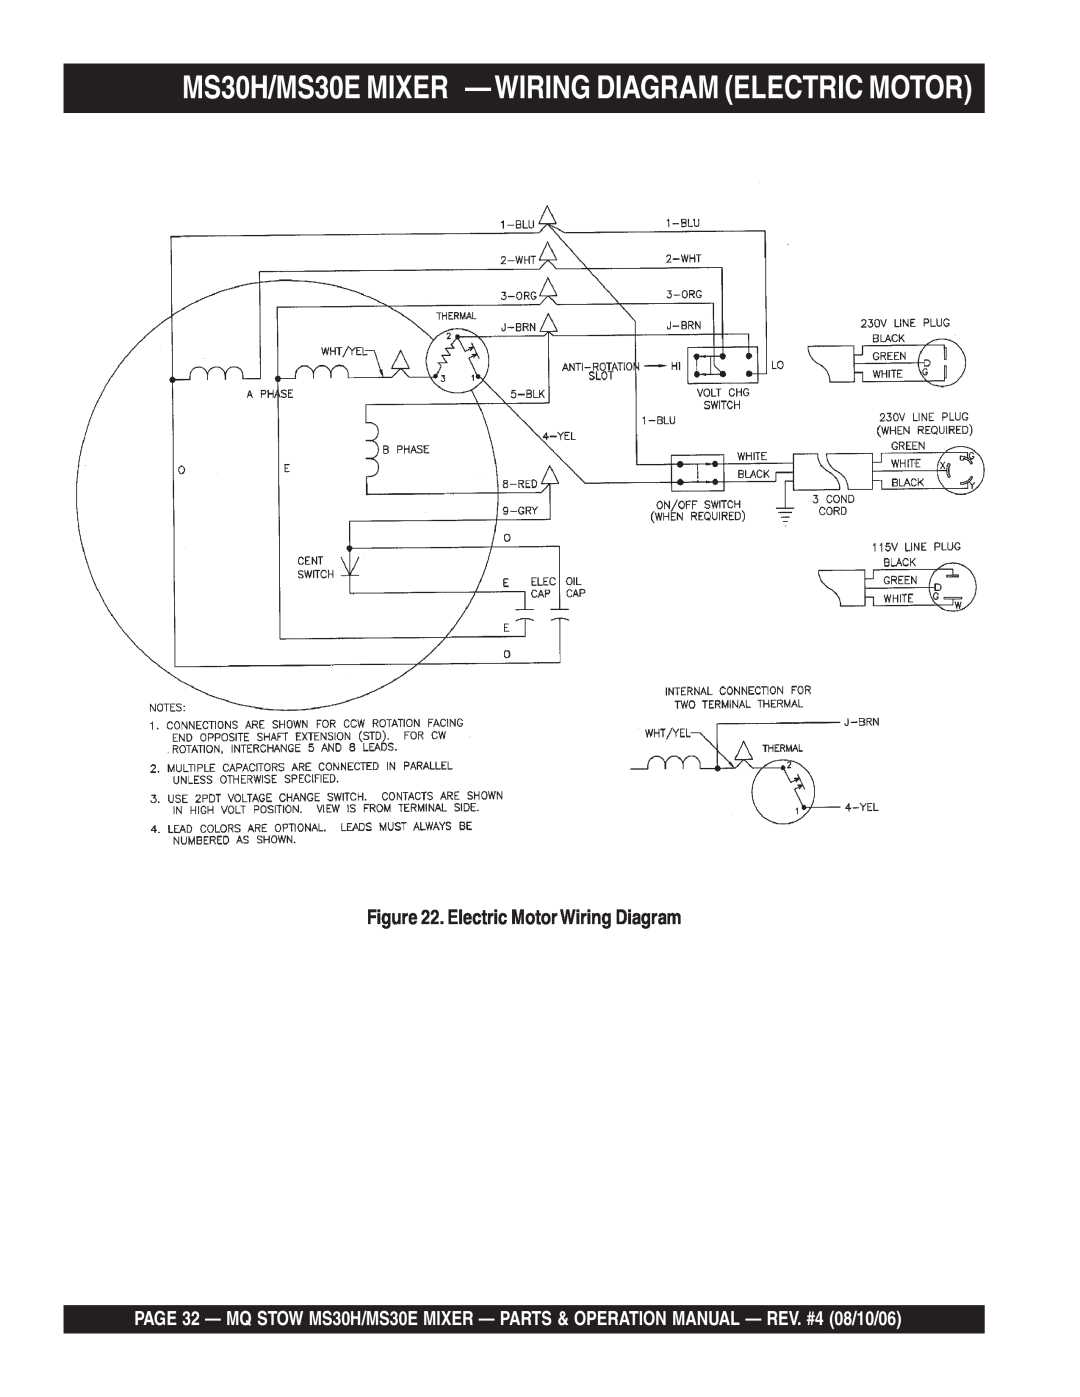 Sonic Alert manual MS30H/MS30E MIXER -WIRING DIAGRAM ELECTRIC MOTOR, Electric Motor Wiring Diagram 